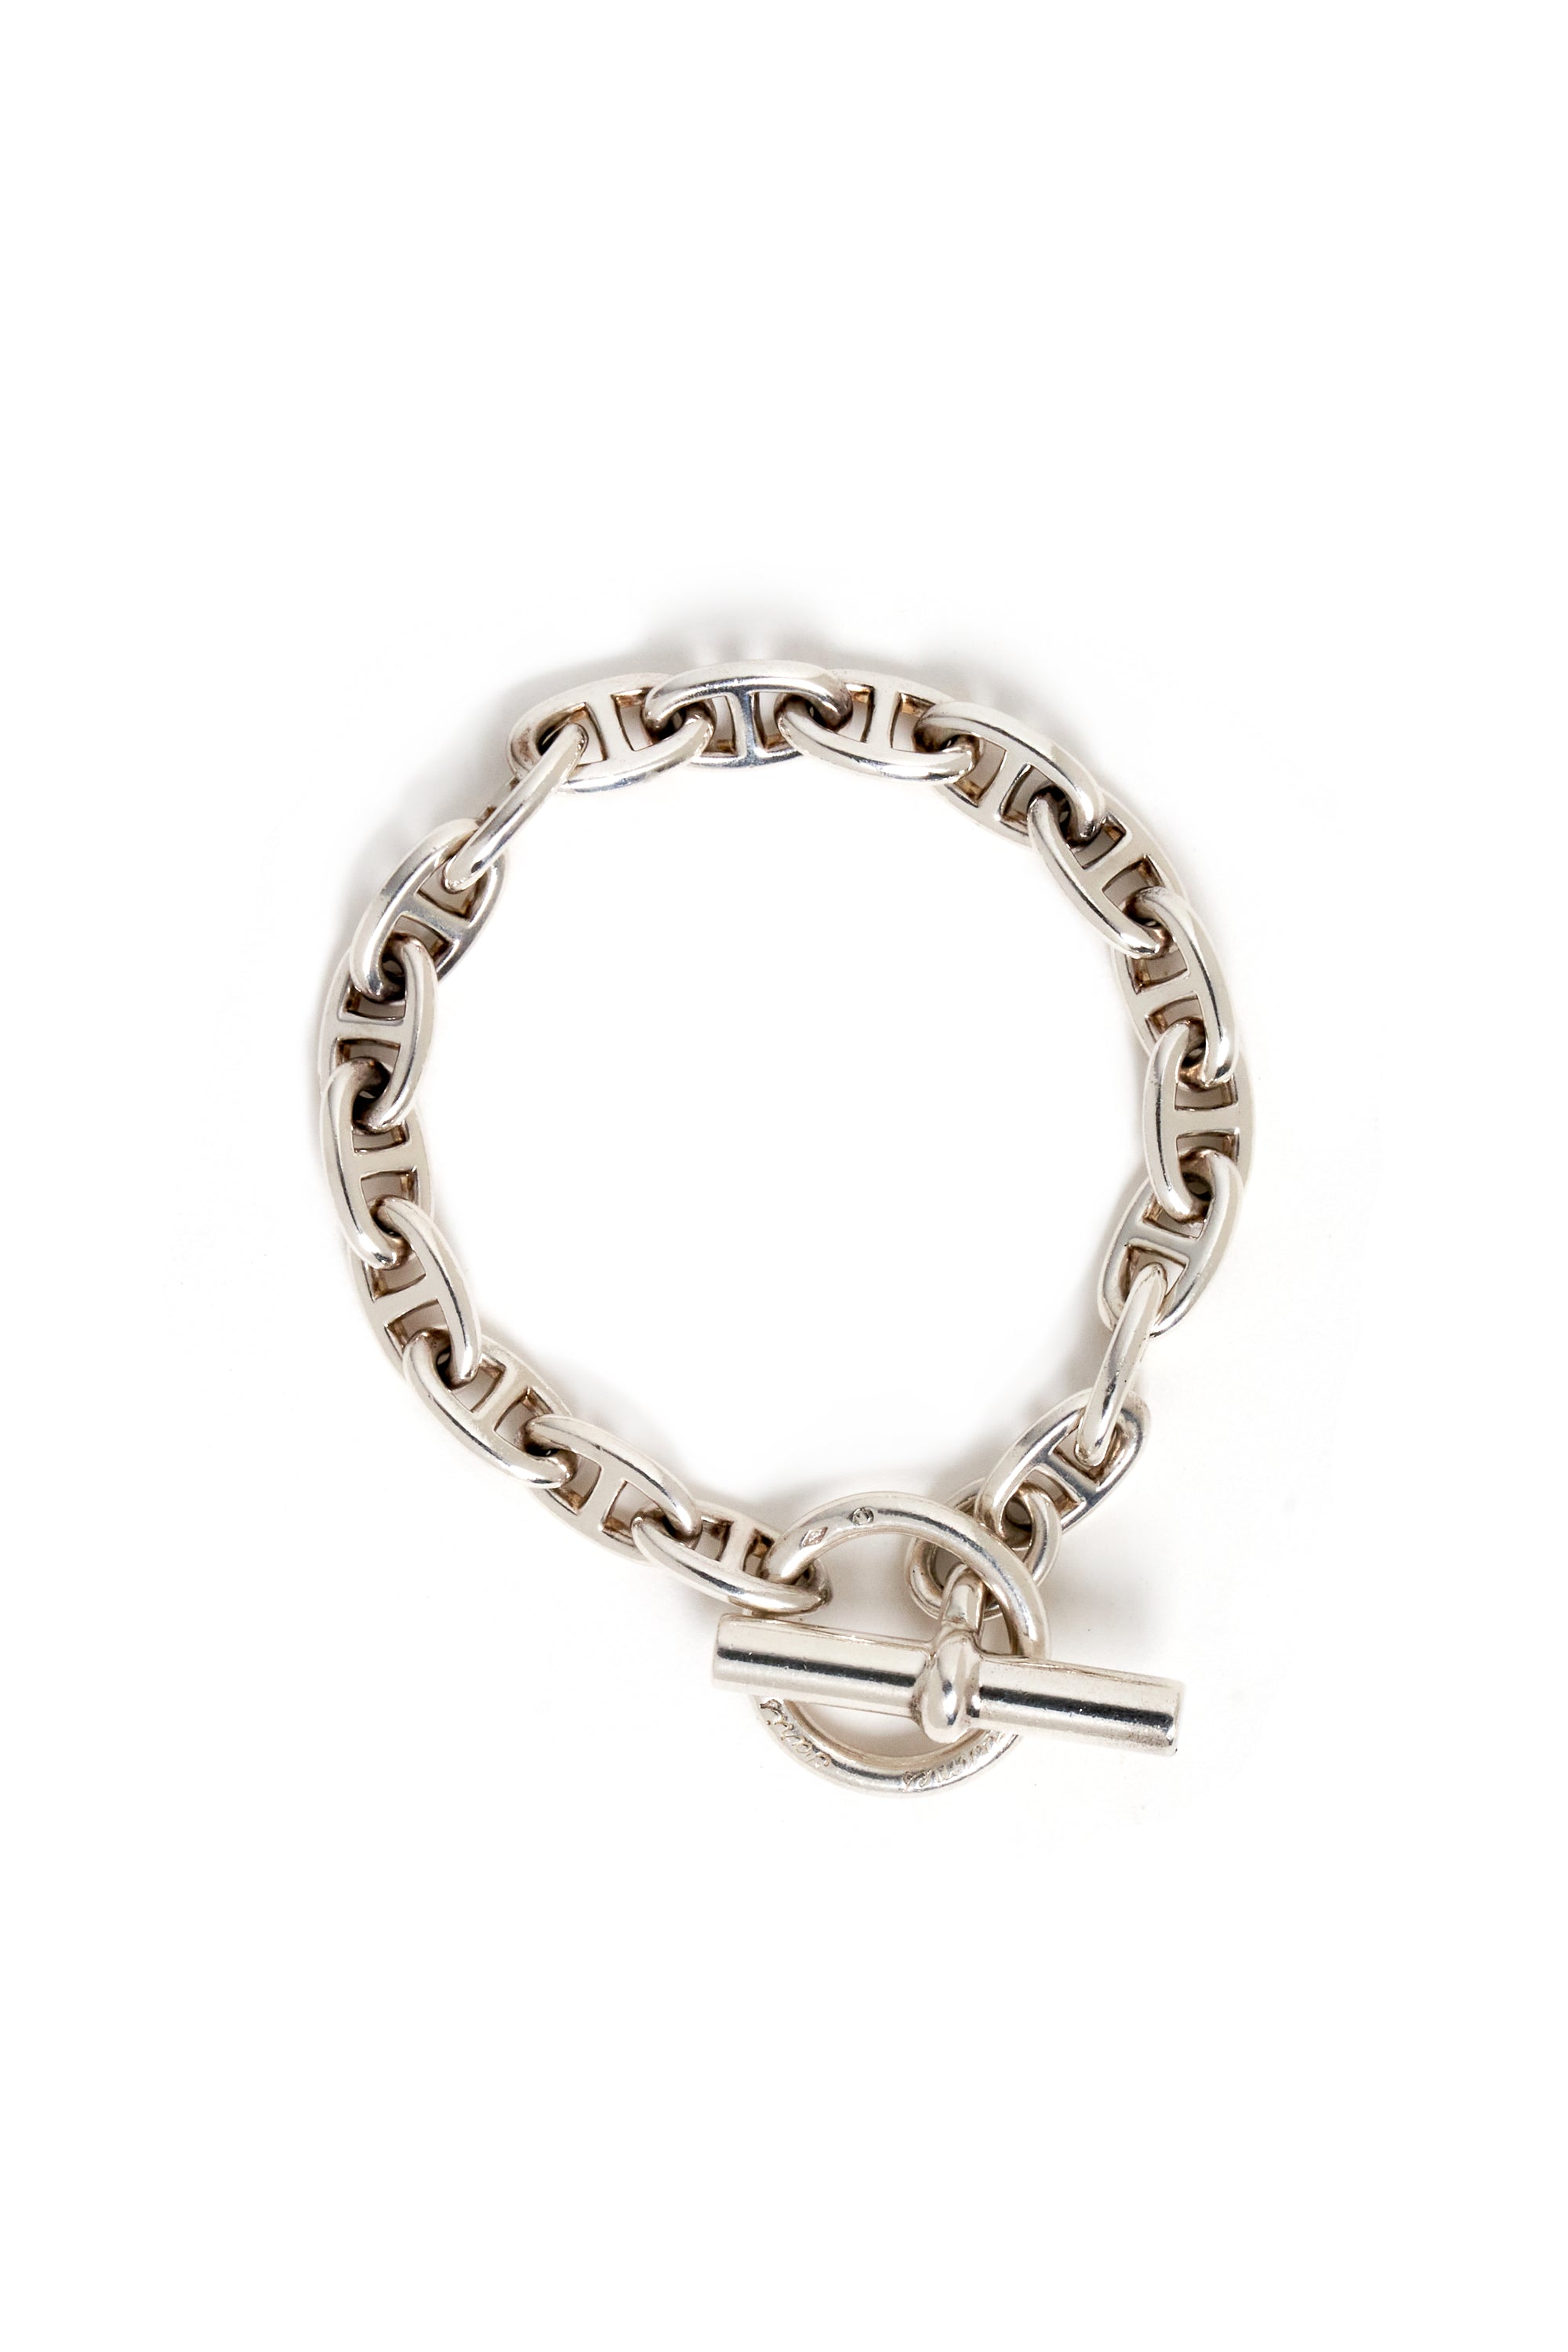 Hermes chain d'anchre Sterling Silver Bracelet